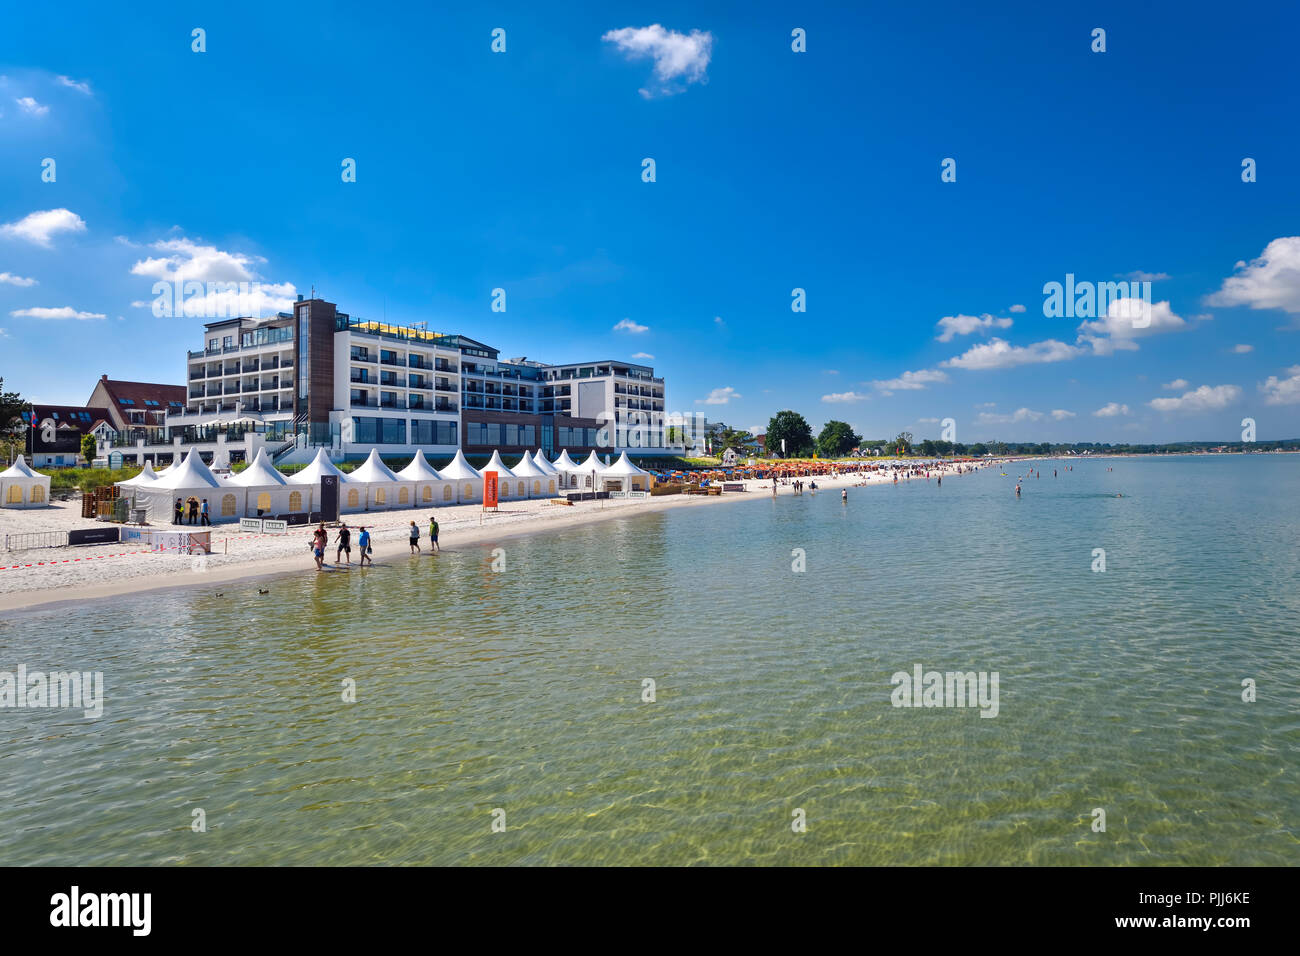 Il mar Baltico e la spiaggia con il Bayside Hotel a Scharbeutz, SCHLESWIG-HOLSTEIN, Germania, Europa Ostsee und Strand mit dem Bayside Hotel in schar Foto Stock